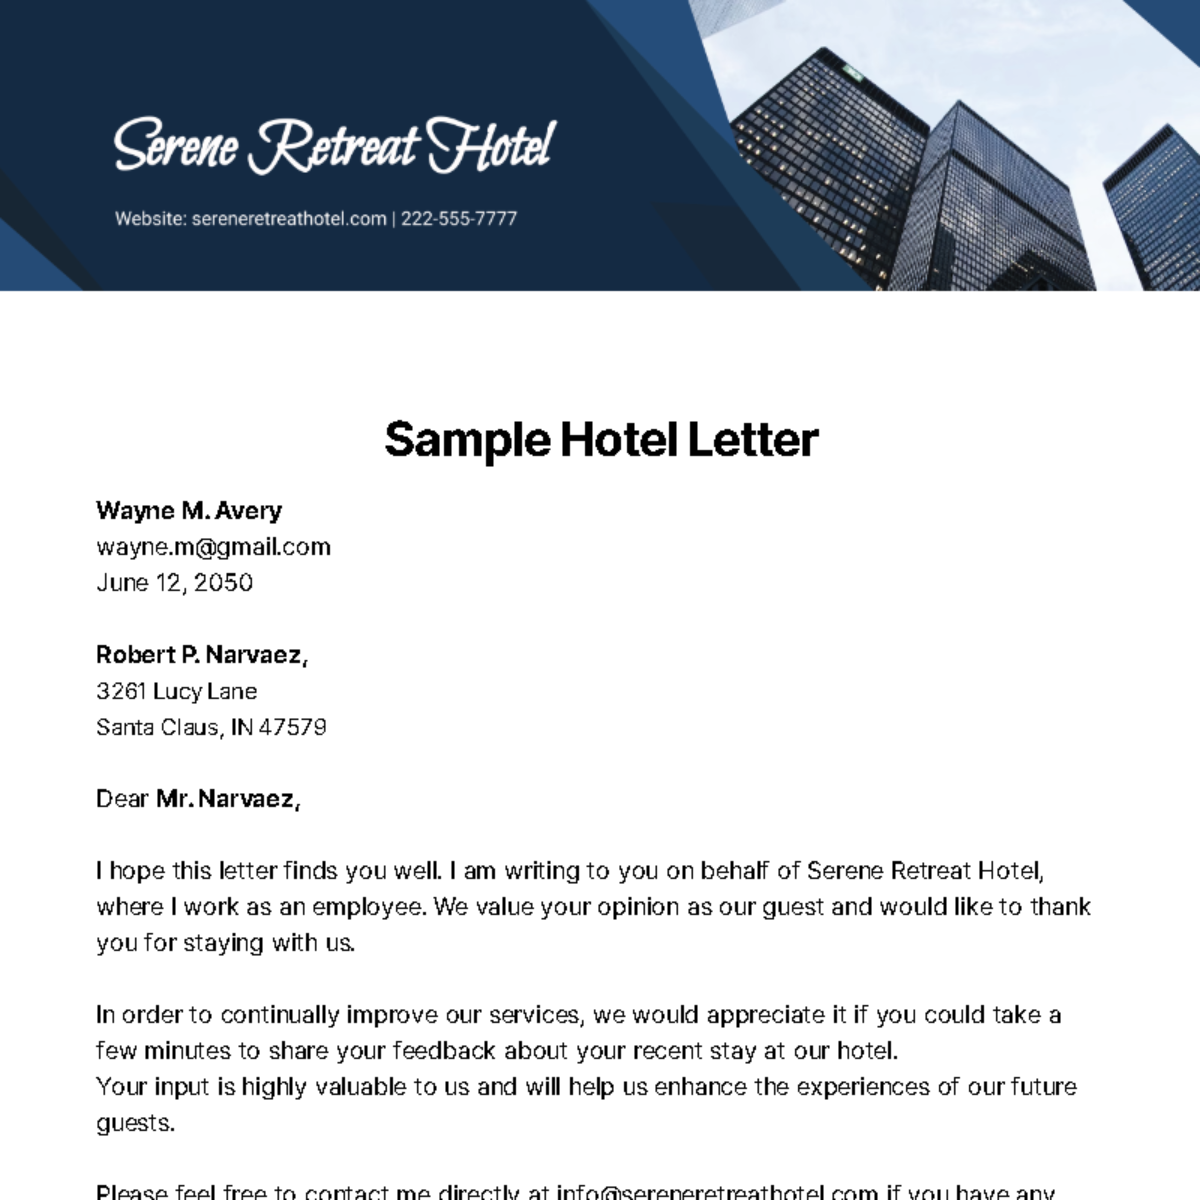 Sample Hotel Letter   Template